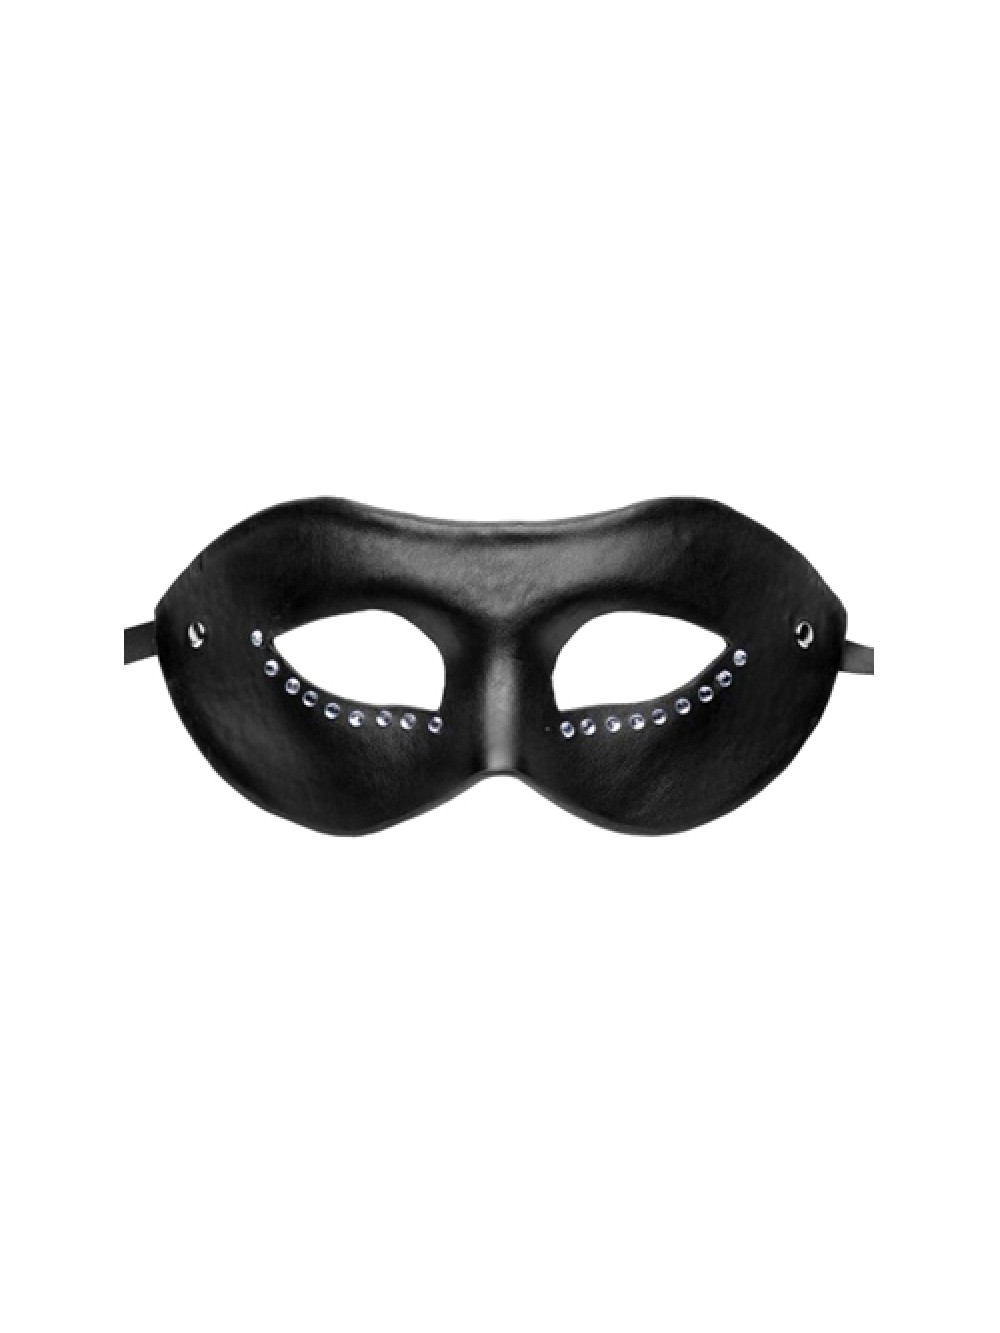 The Luxoria Masquerade Mask 848518005021